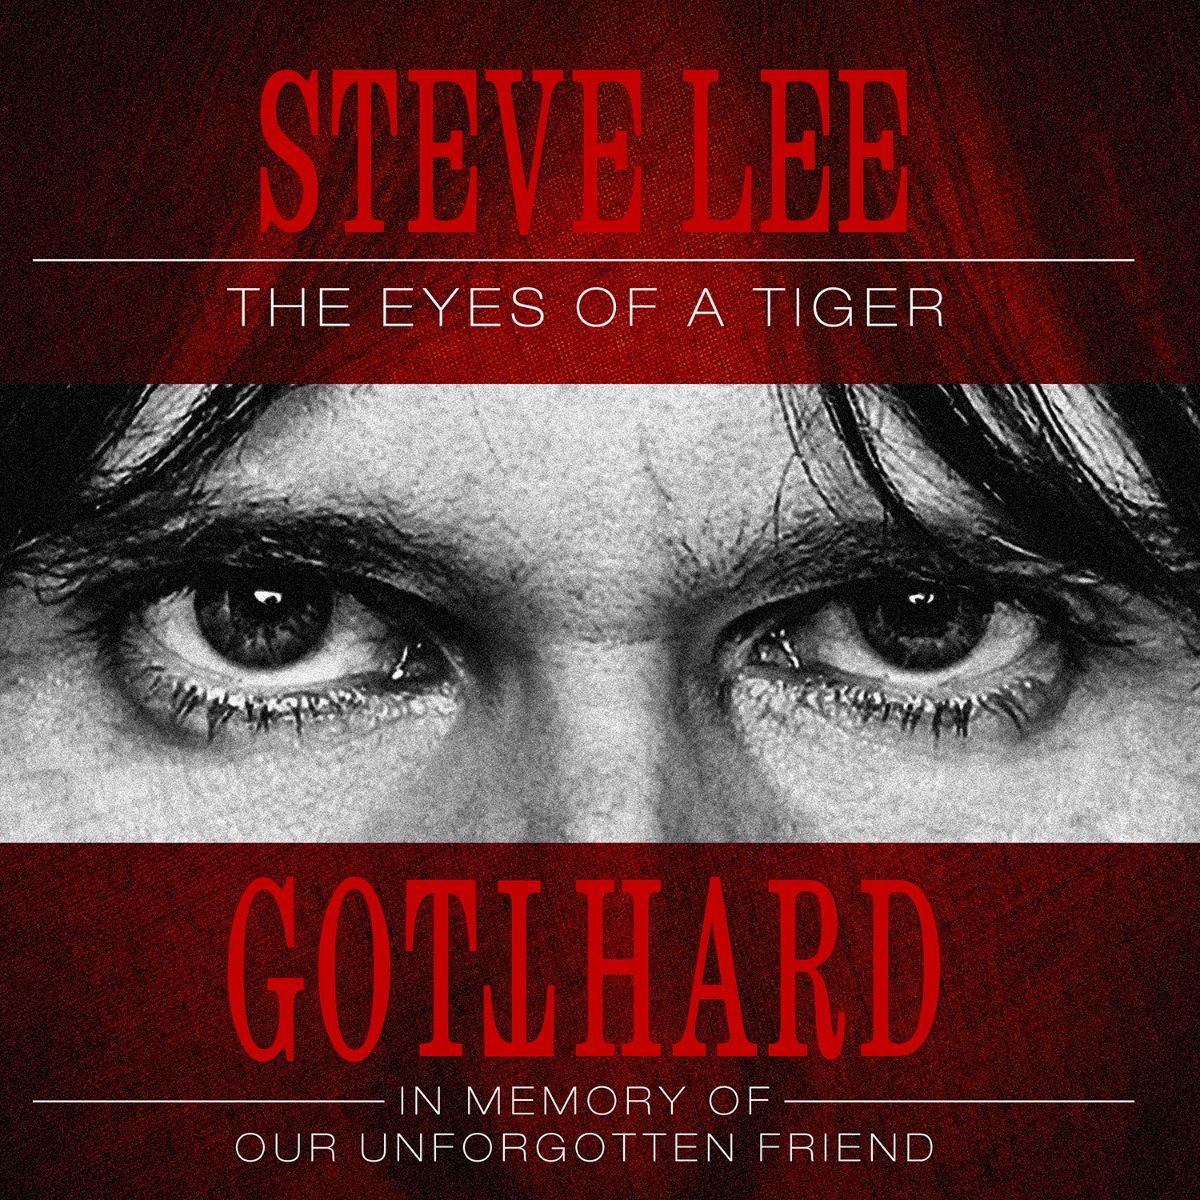 "Steve Lee - The Eyes Of A Tiger: In Memory Of Our Unforgotten Friend"-Album kommt im Oktober